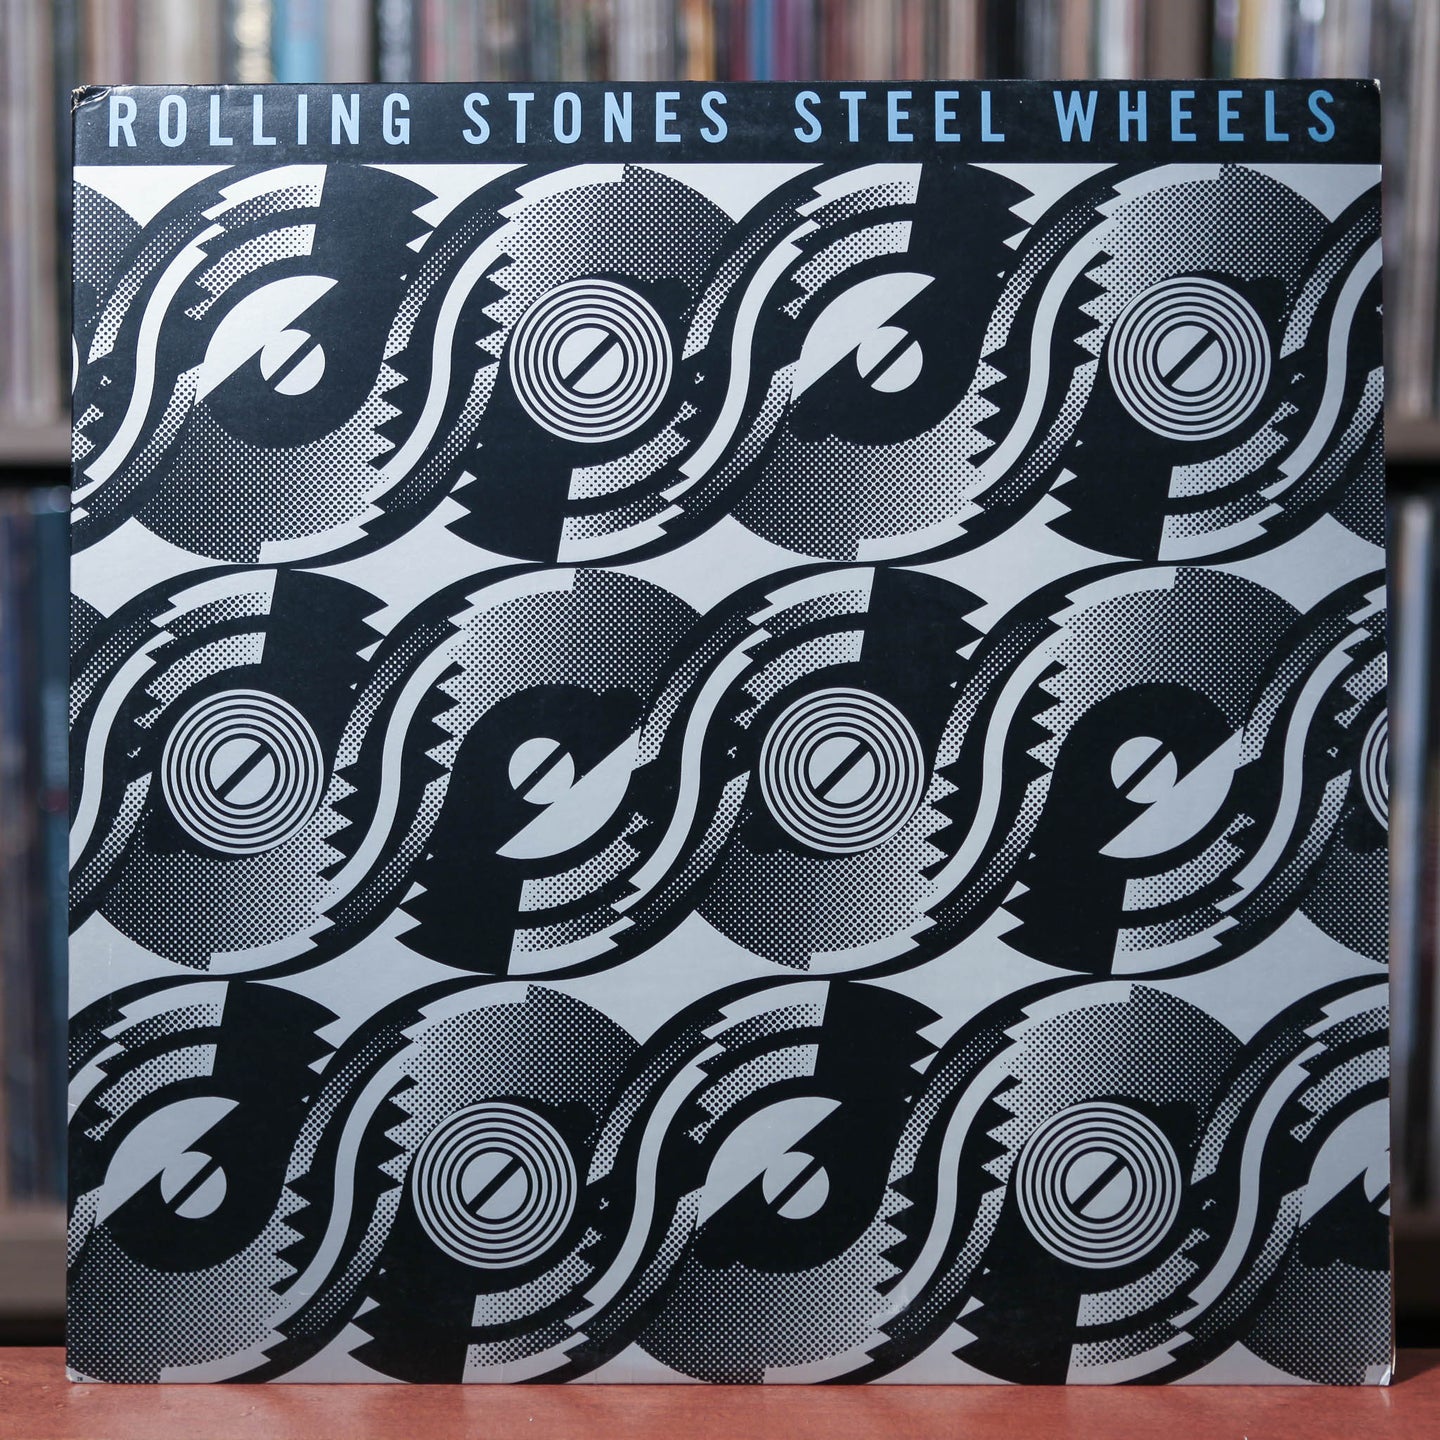 Rolling Stones - Steel Wheels - 1989 Rolling Stones Records, EX/EX